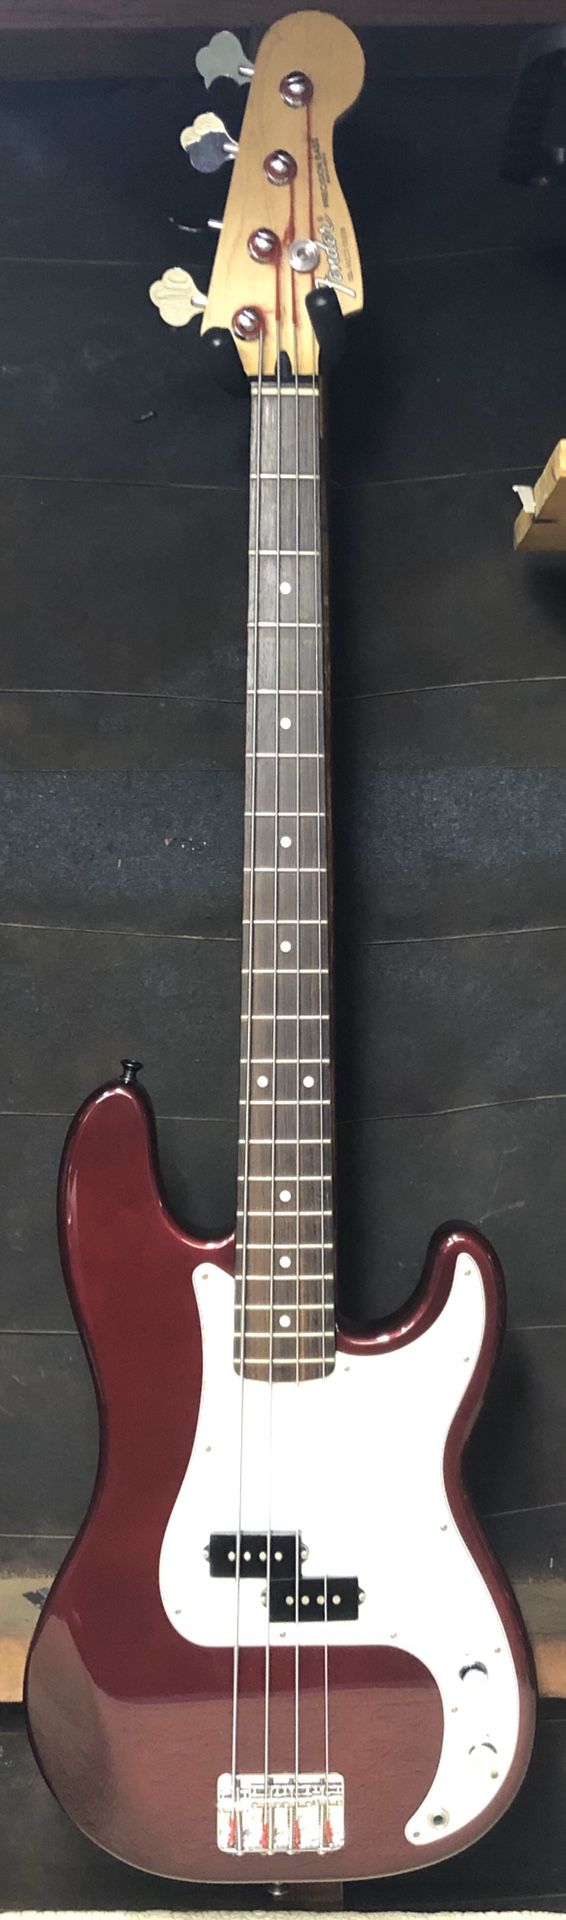 2002 Fender Precision Bass Guitar Made in Mexico